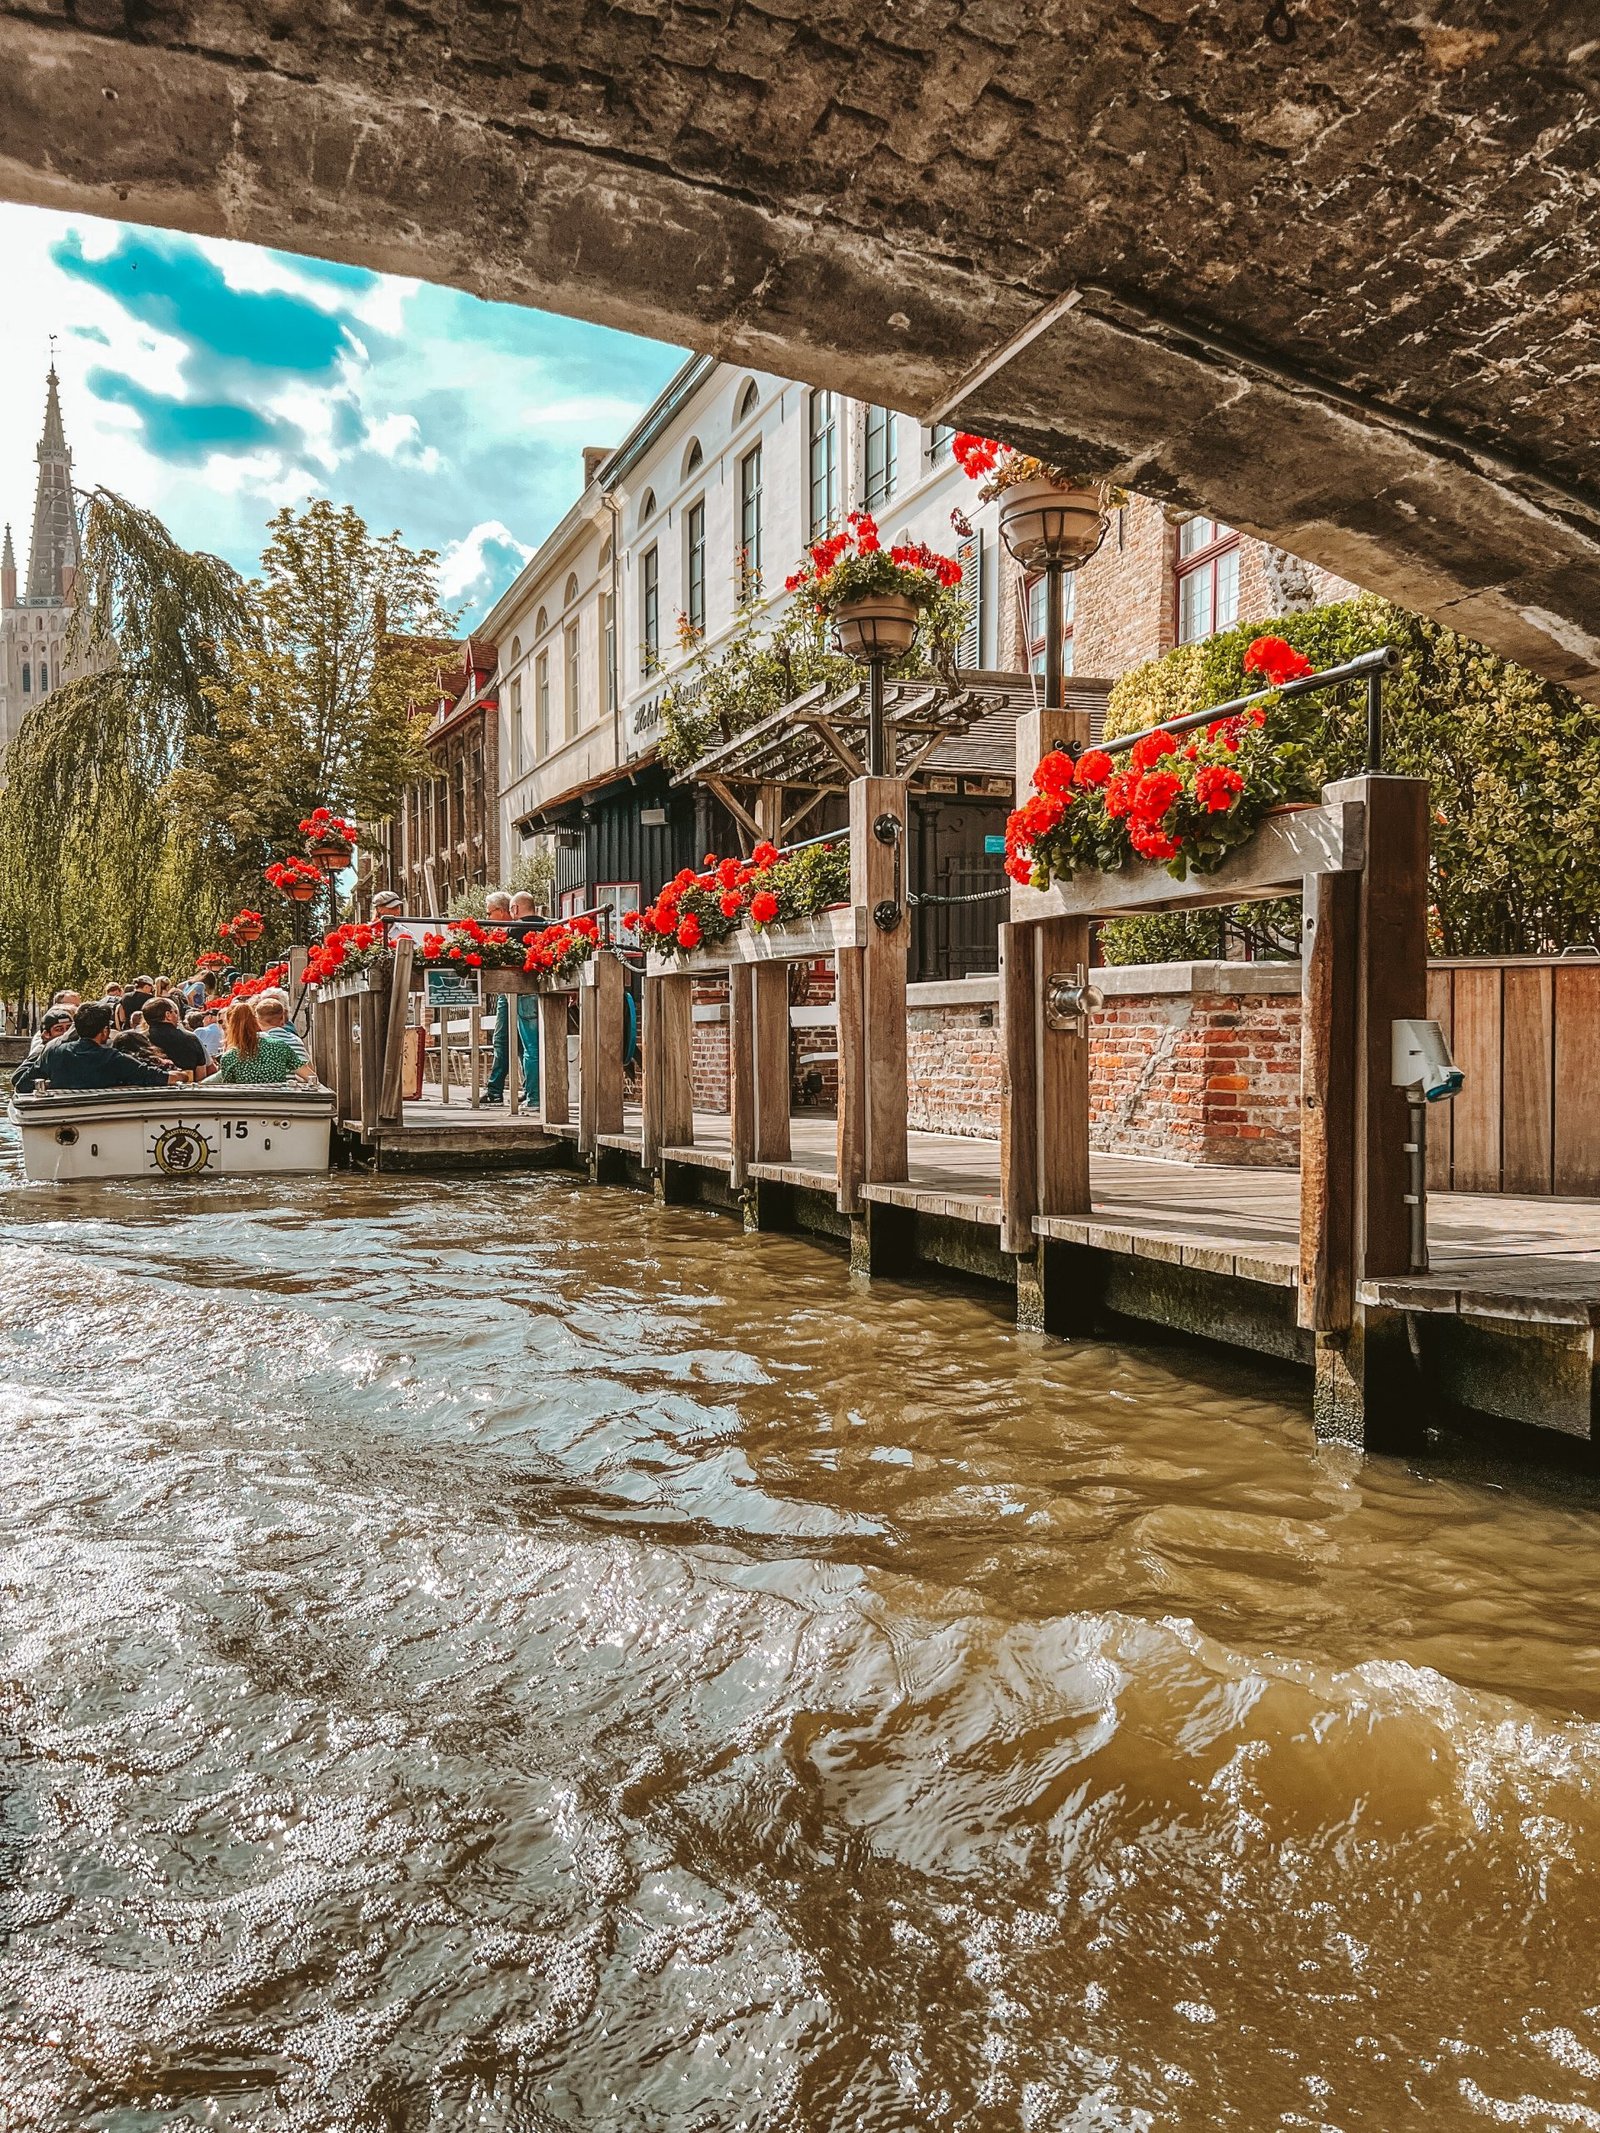 Visit Bruges in Belgium, A guide